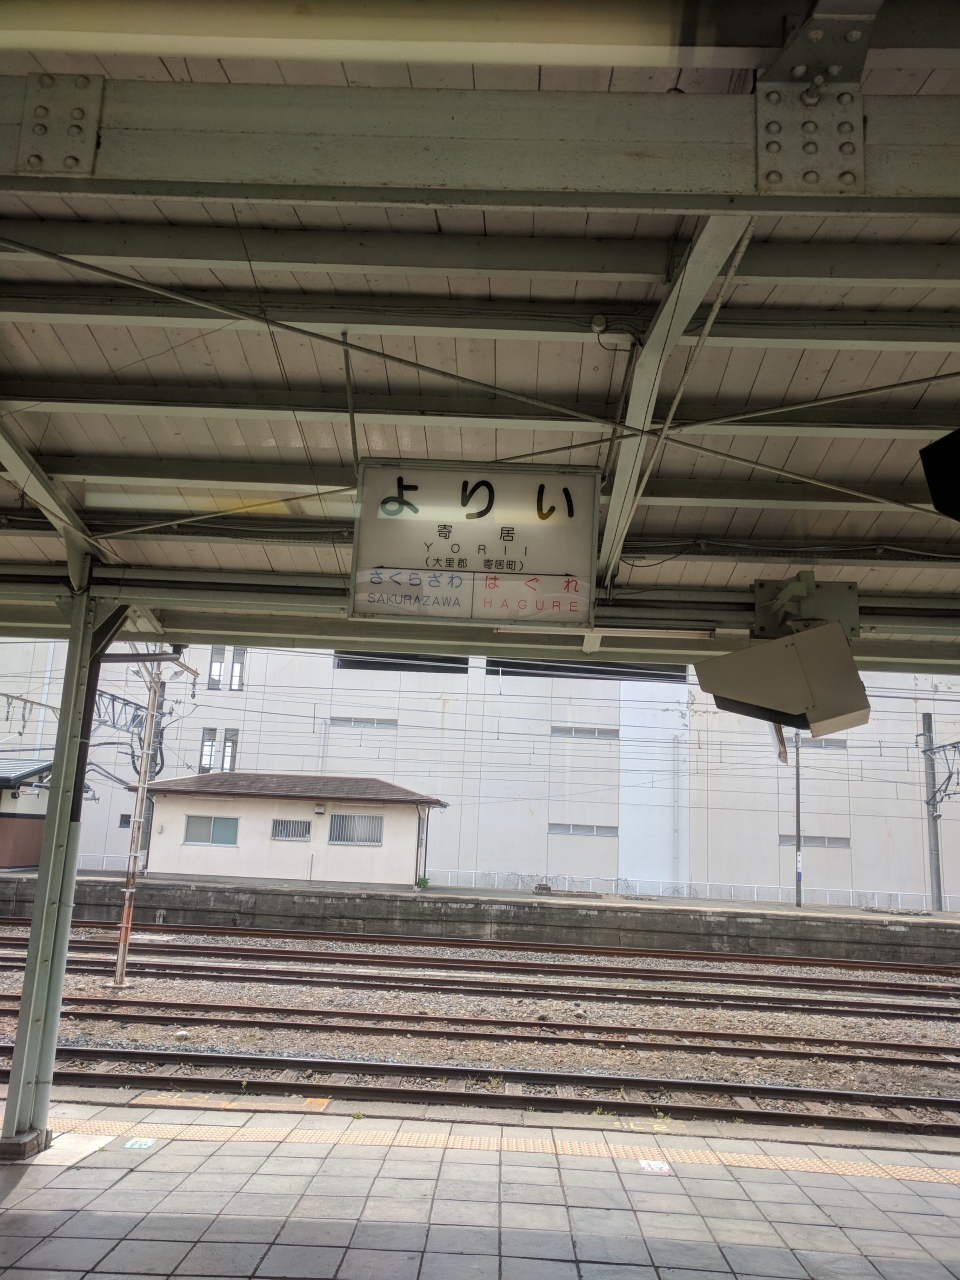 鉄道乗車記録「寄居駅から熊谷駅」駅名看板の写真(2) by ARU 撮影日時:2019年03月26日